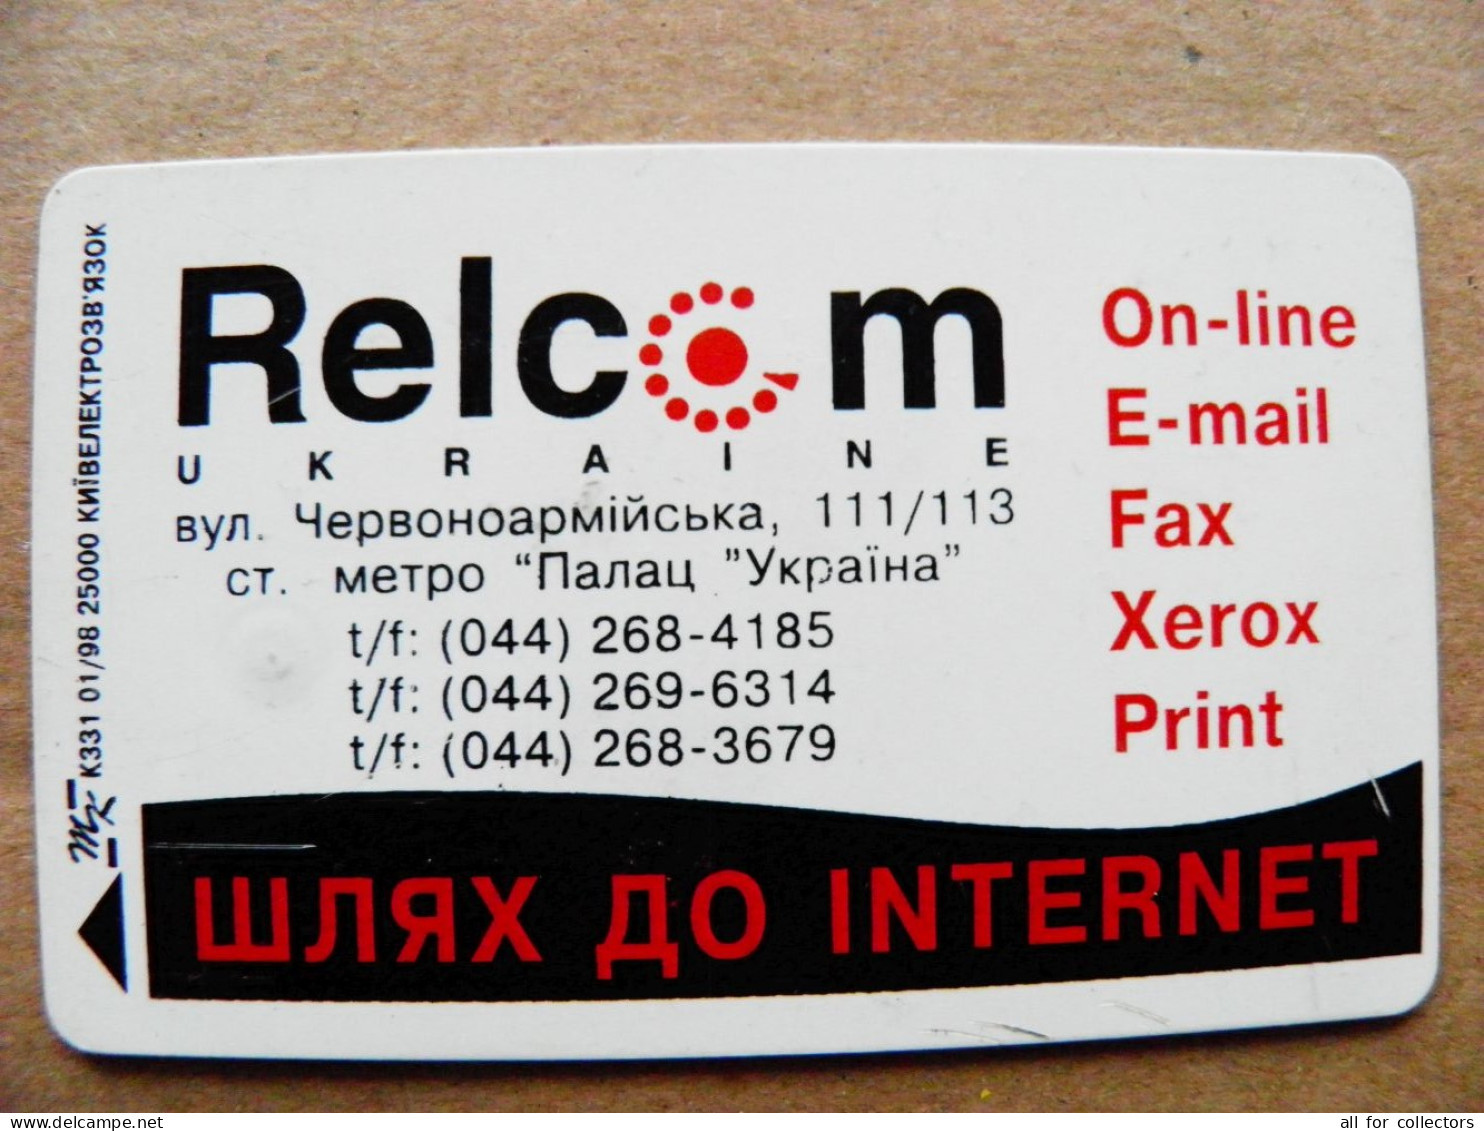 Phonecard Chip Advertising Relcom Internet K331 01/98 25,000ex. 840 Units Prefix Nr.BV (in Cyrillic) UKRAINE - Ukraine